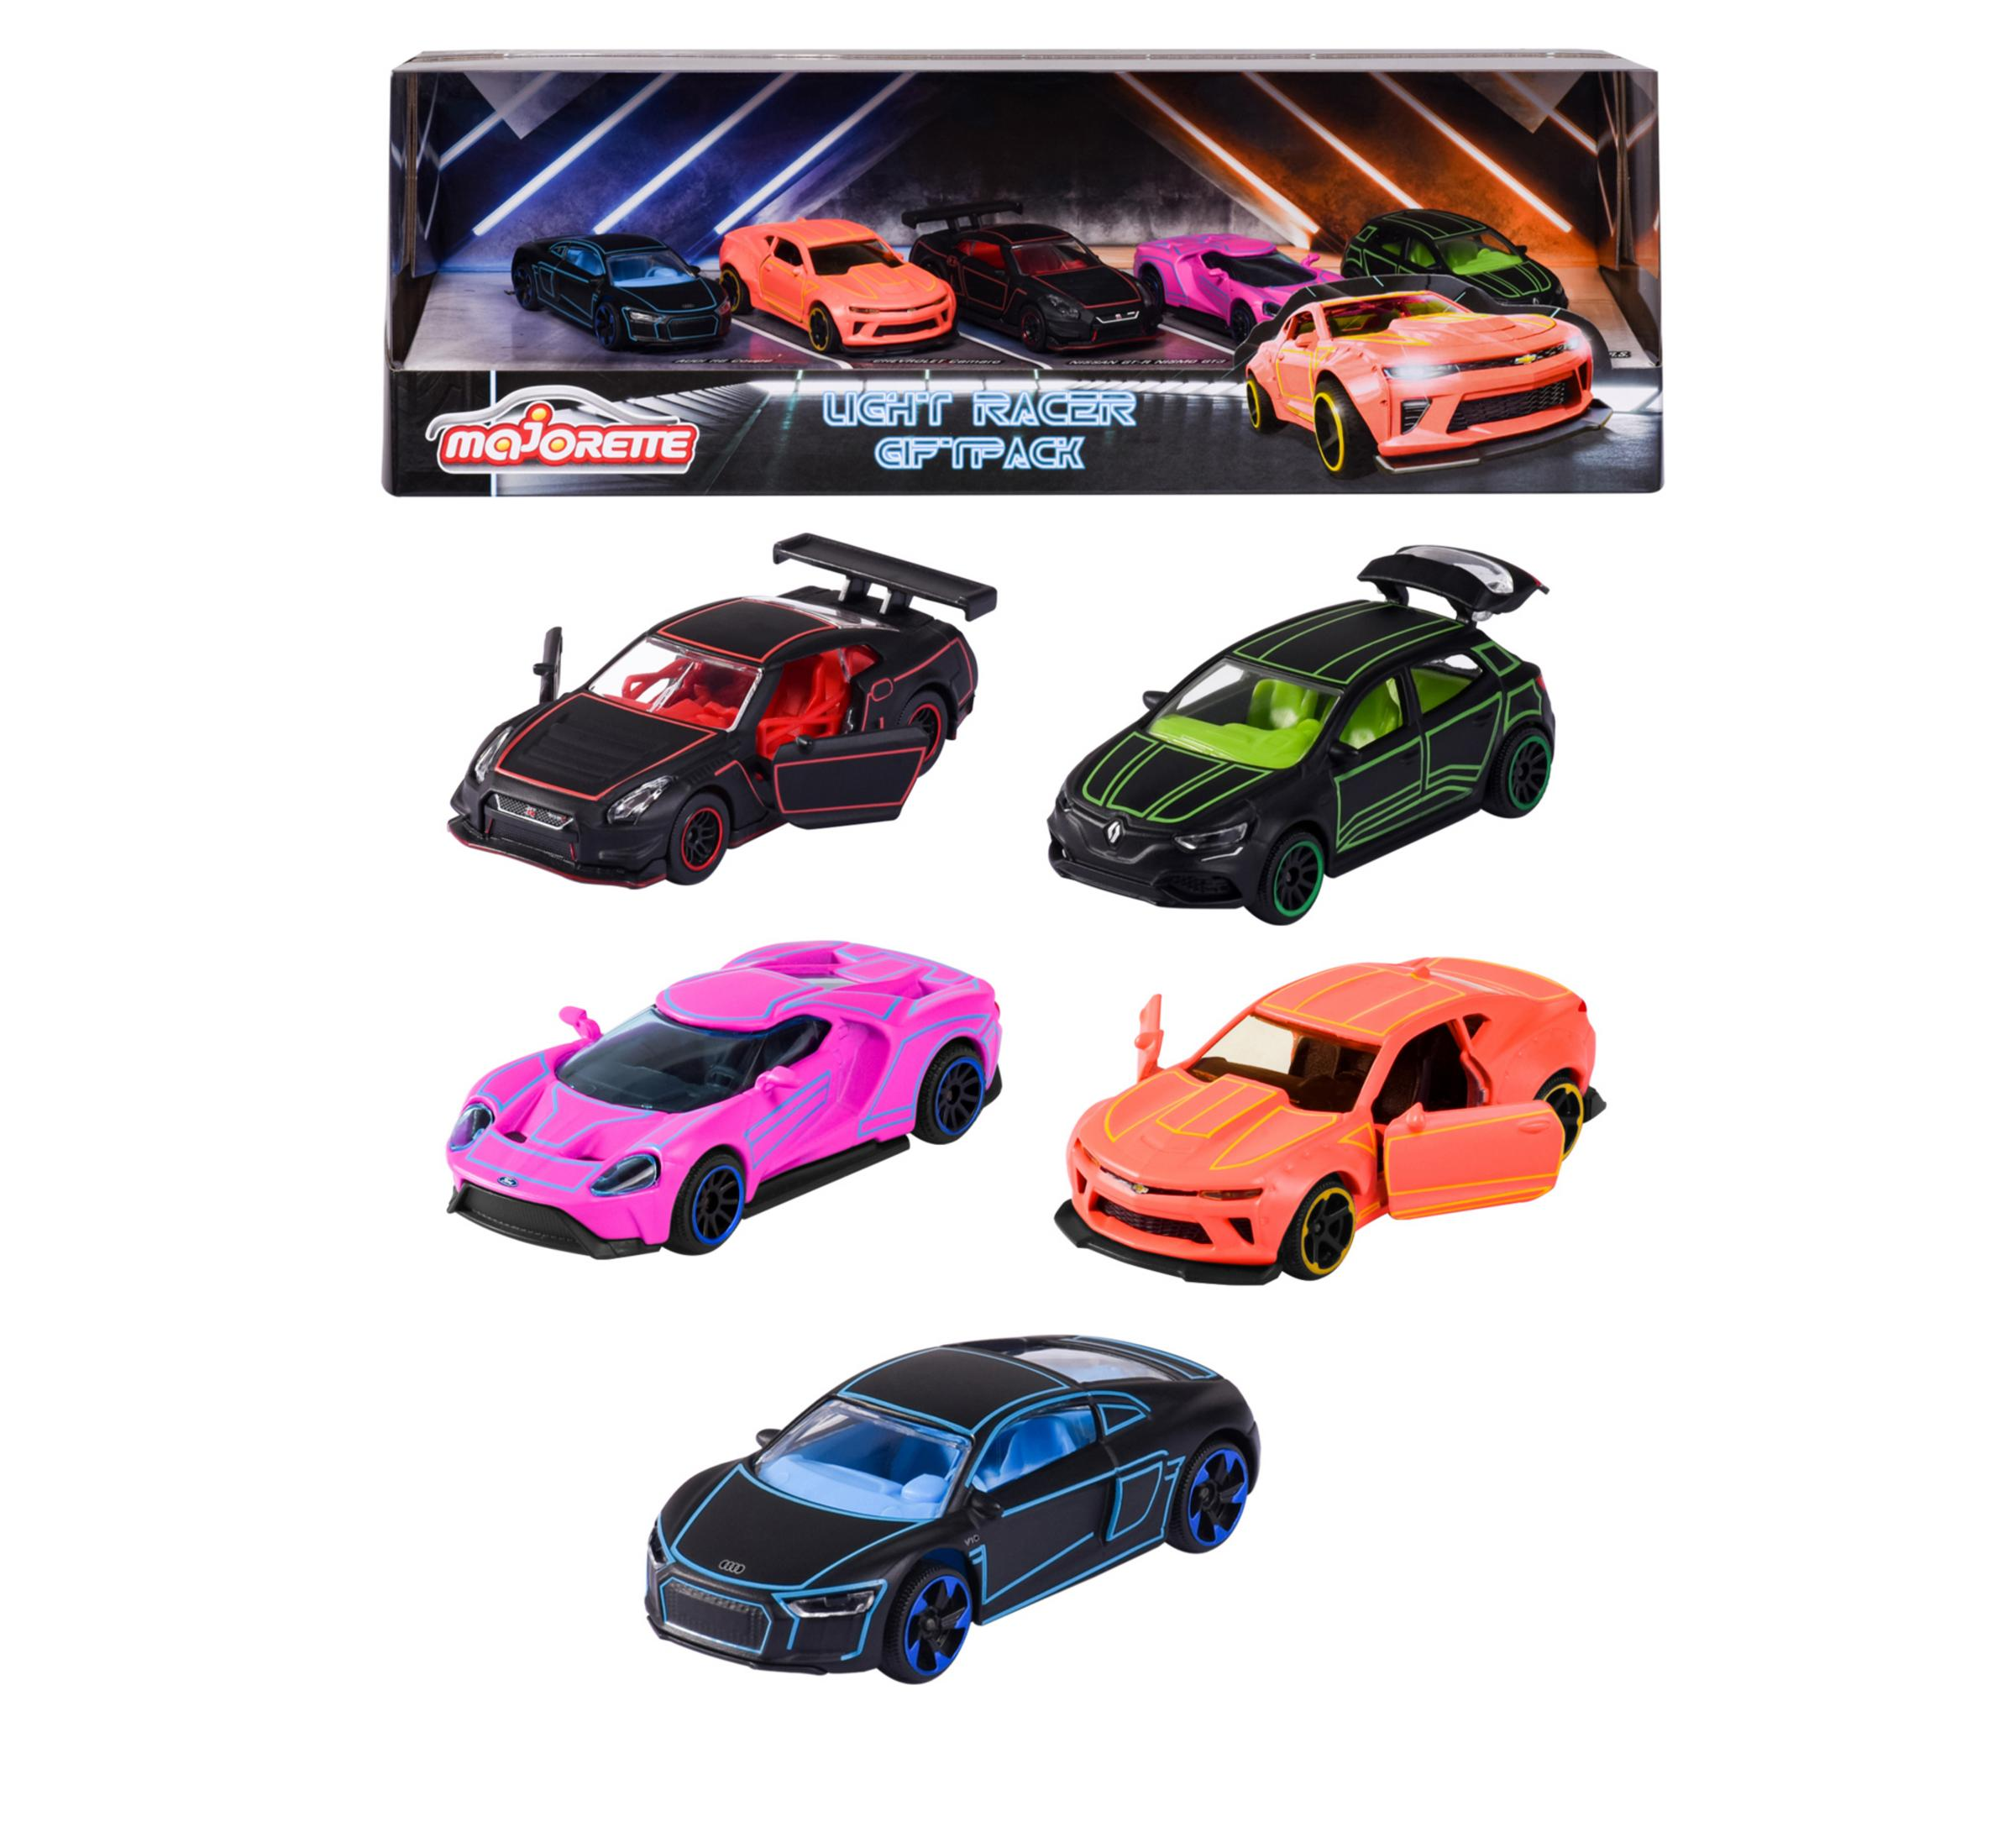 212053179 RACER MAJORETTE Spielzeugauto GIFTPACK Mehrfarbig PIECES 5 LIGHT